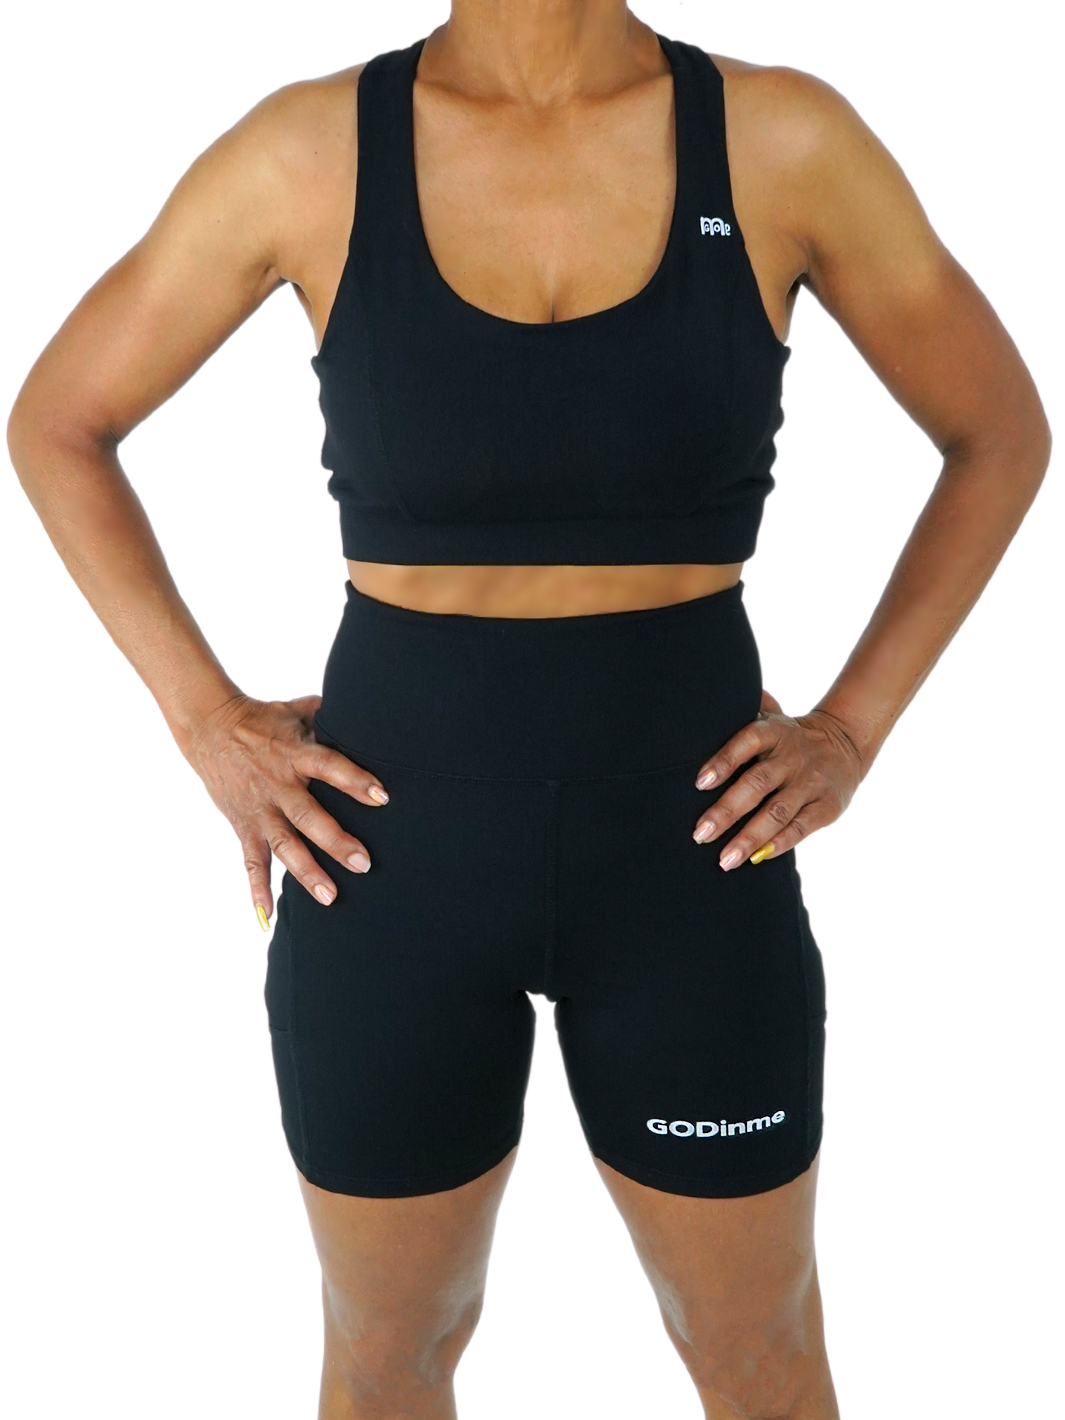 High waist ab support, Bermuda length, Biker shorts, Black color with GODinme brand name printed on left leg